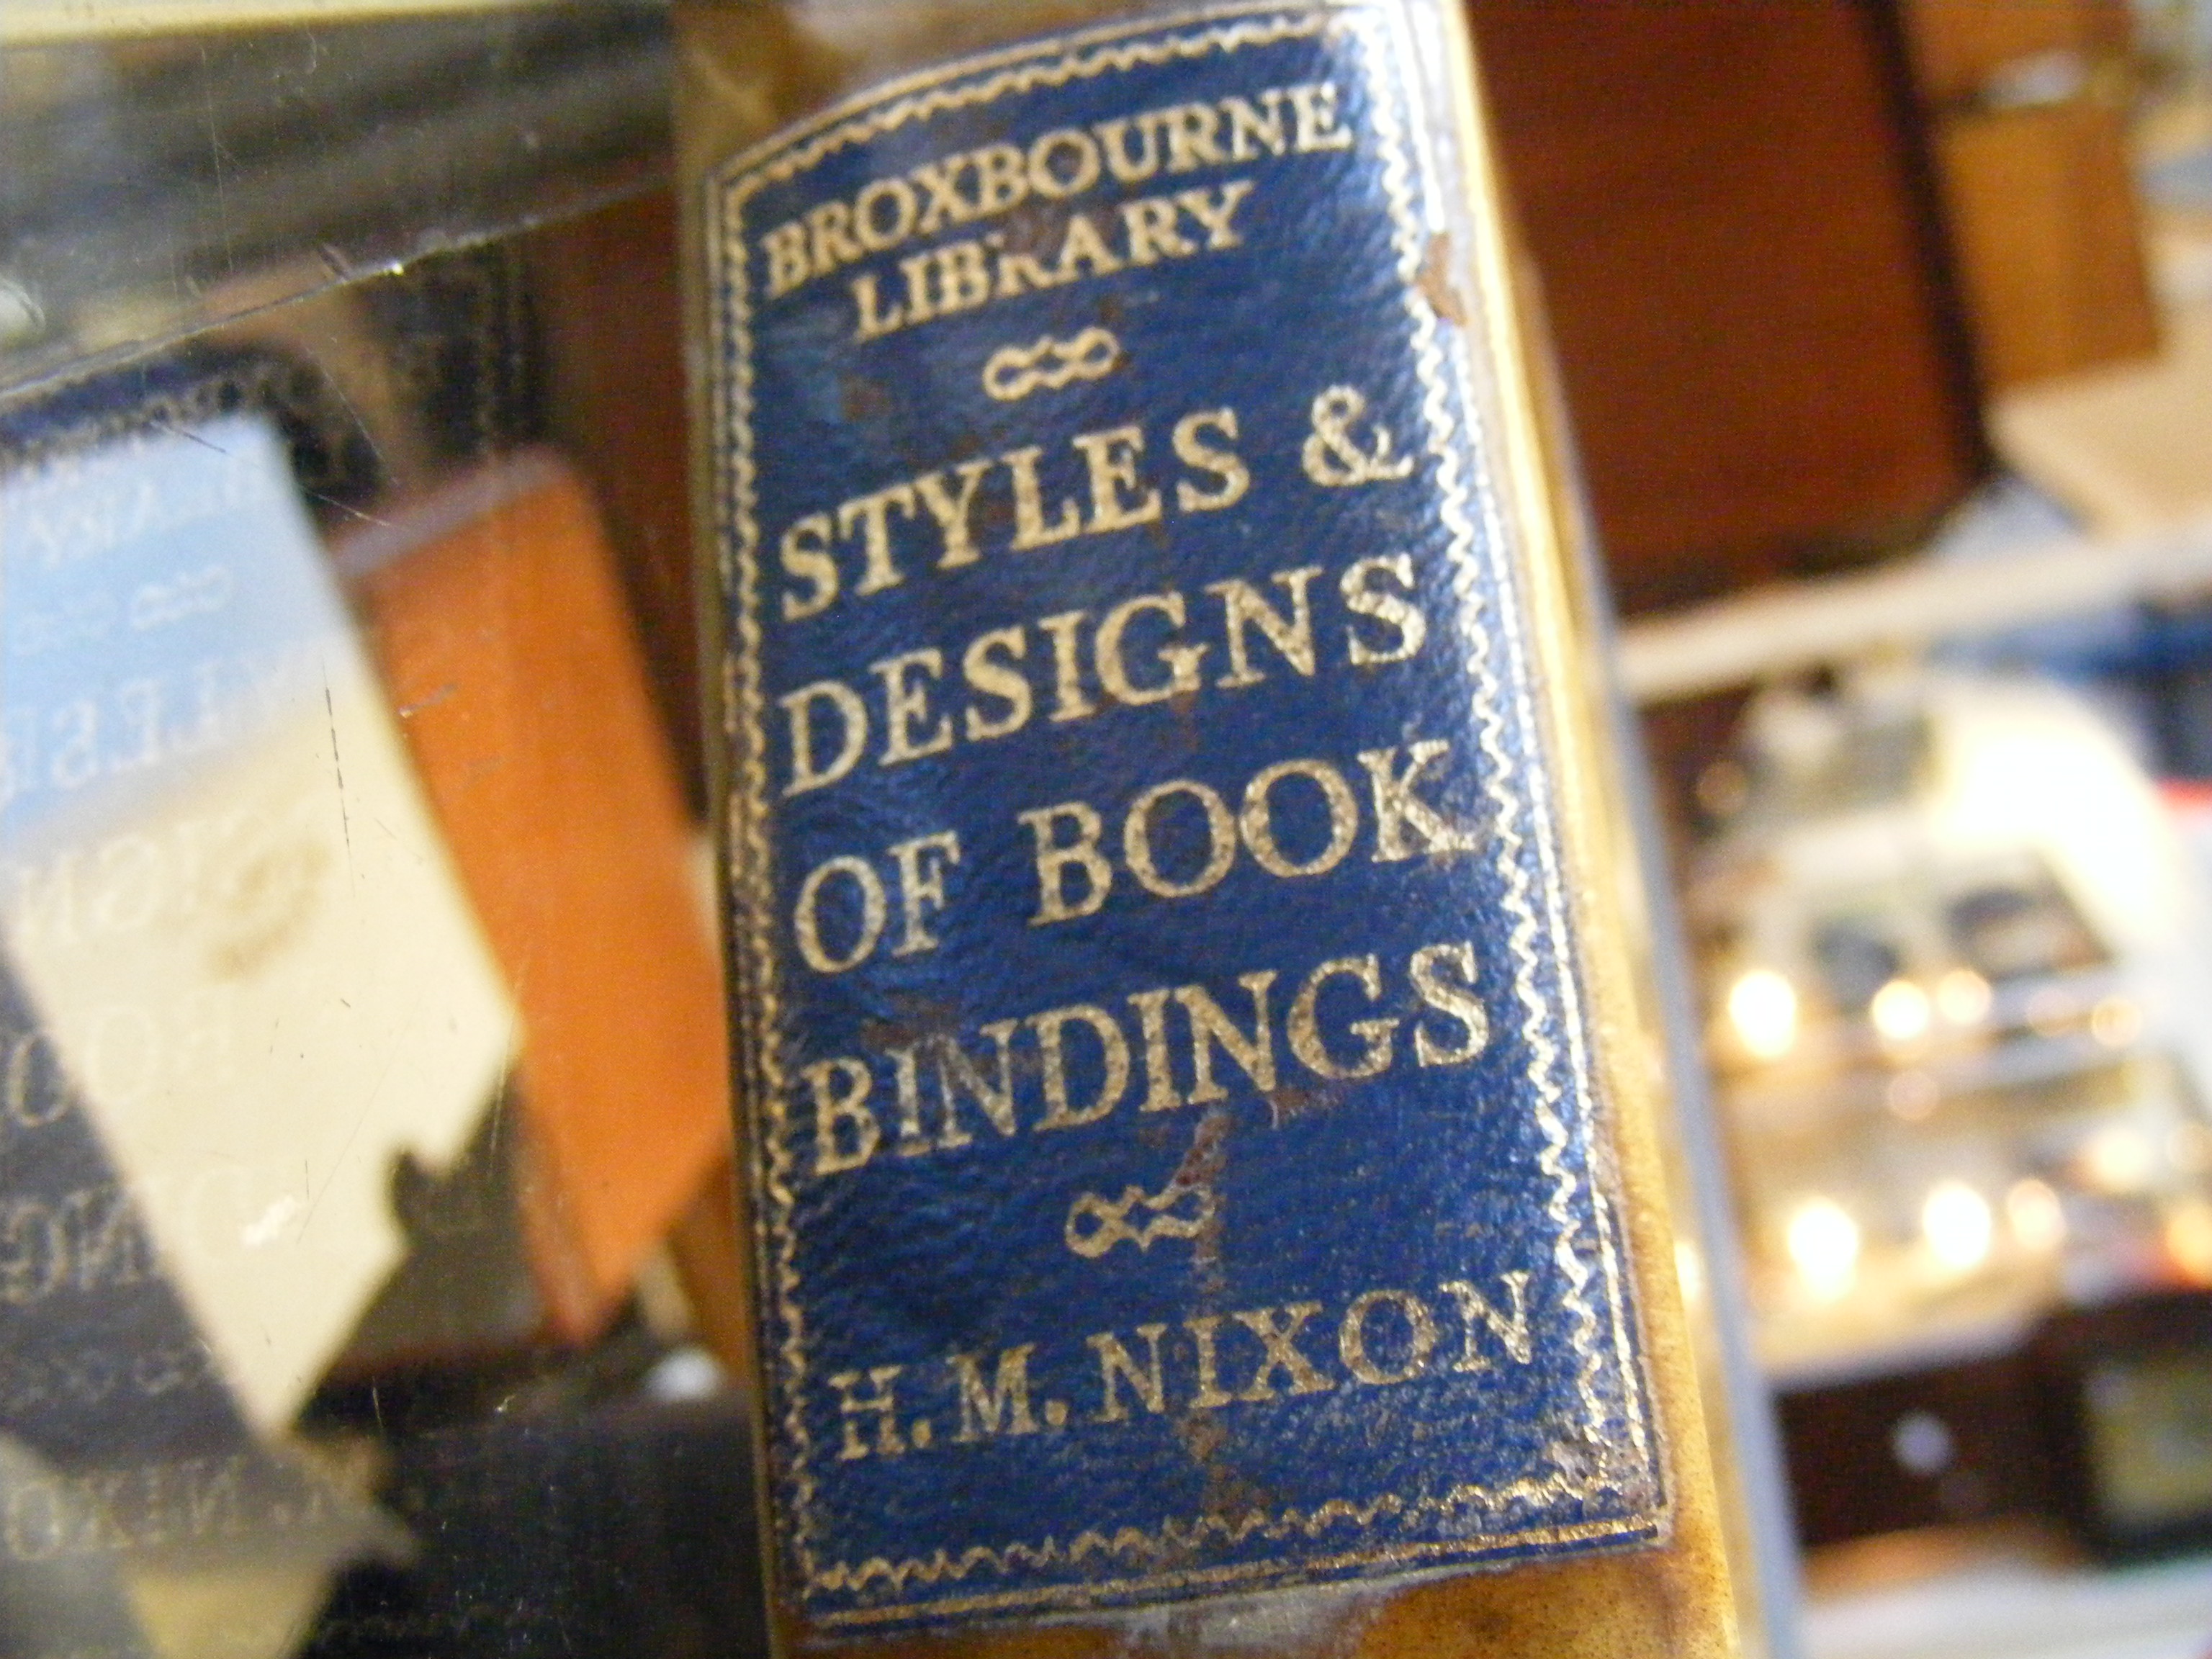 H M Nixon 'Styles and Designs of Bookbindings' - L - Image 16 of 16